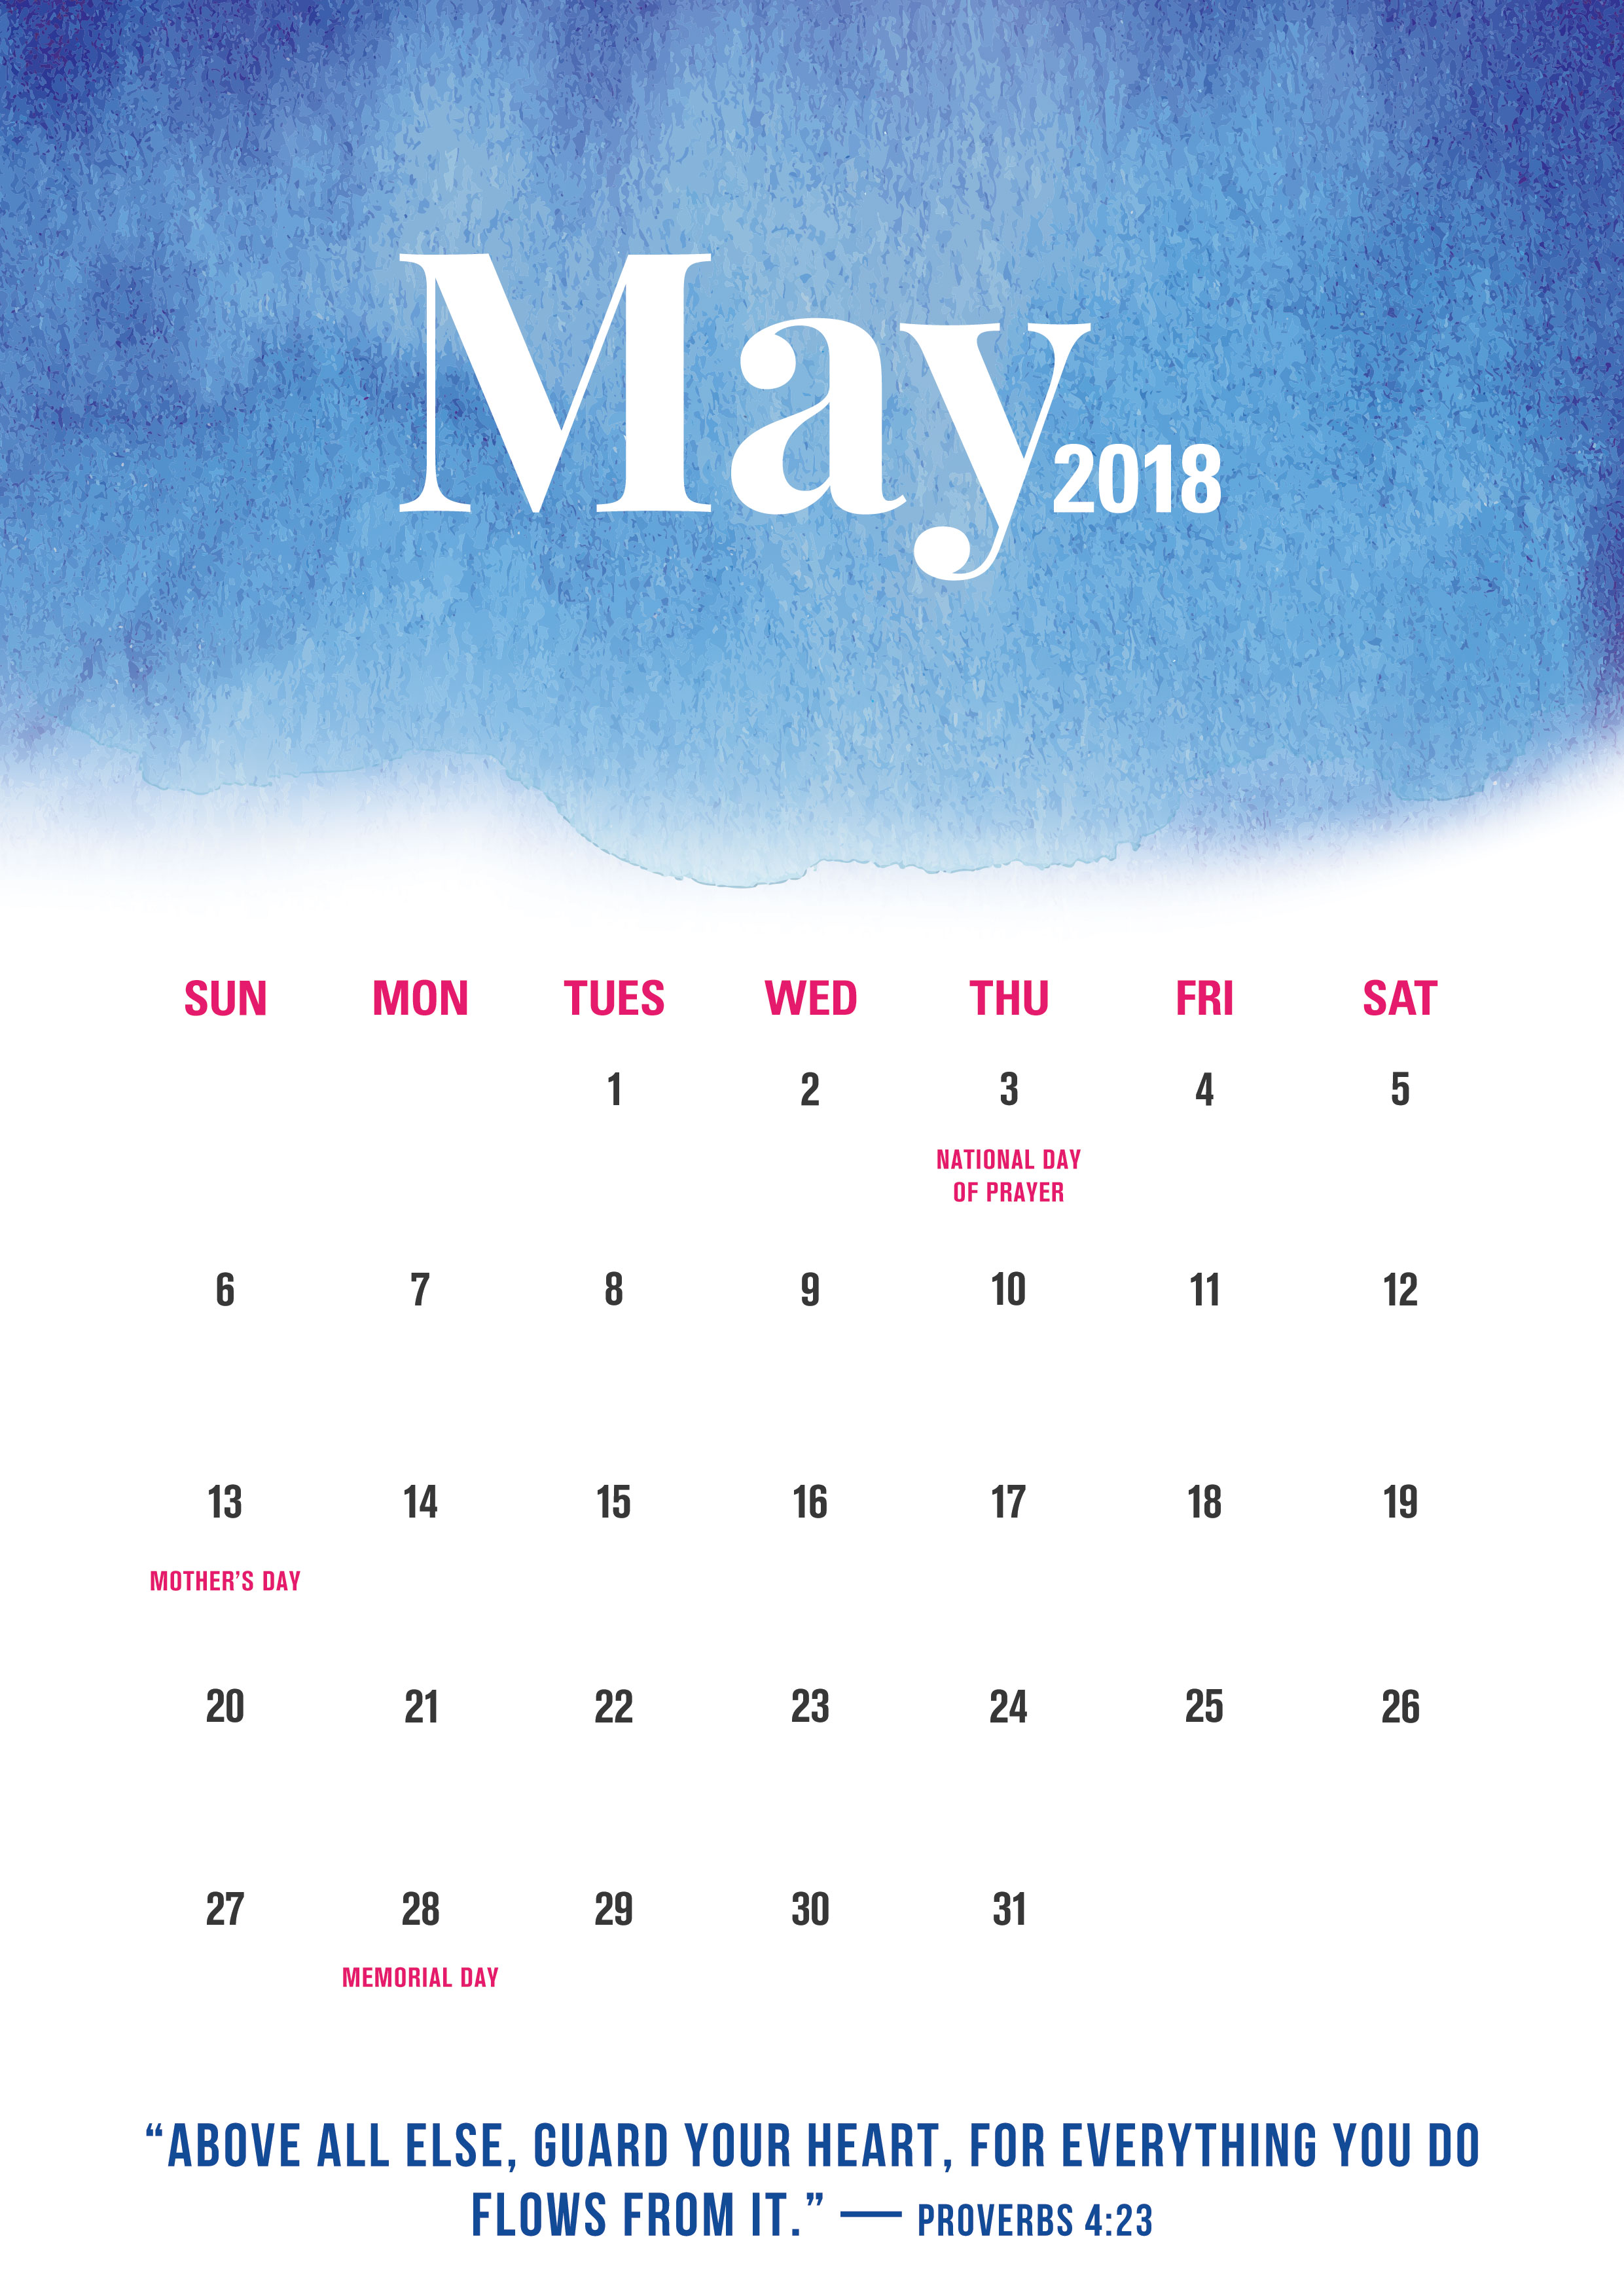 May 2018 Calendar Download Christianbook com Blog